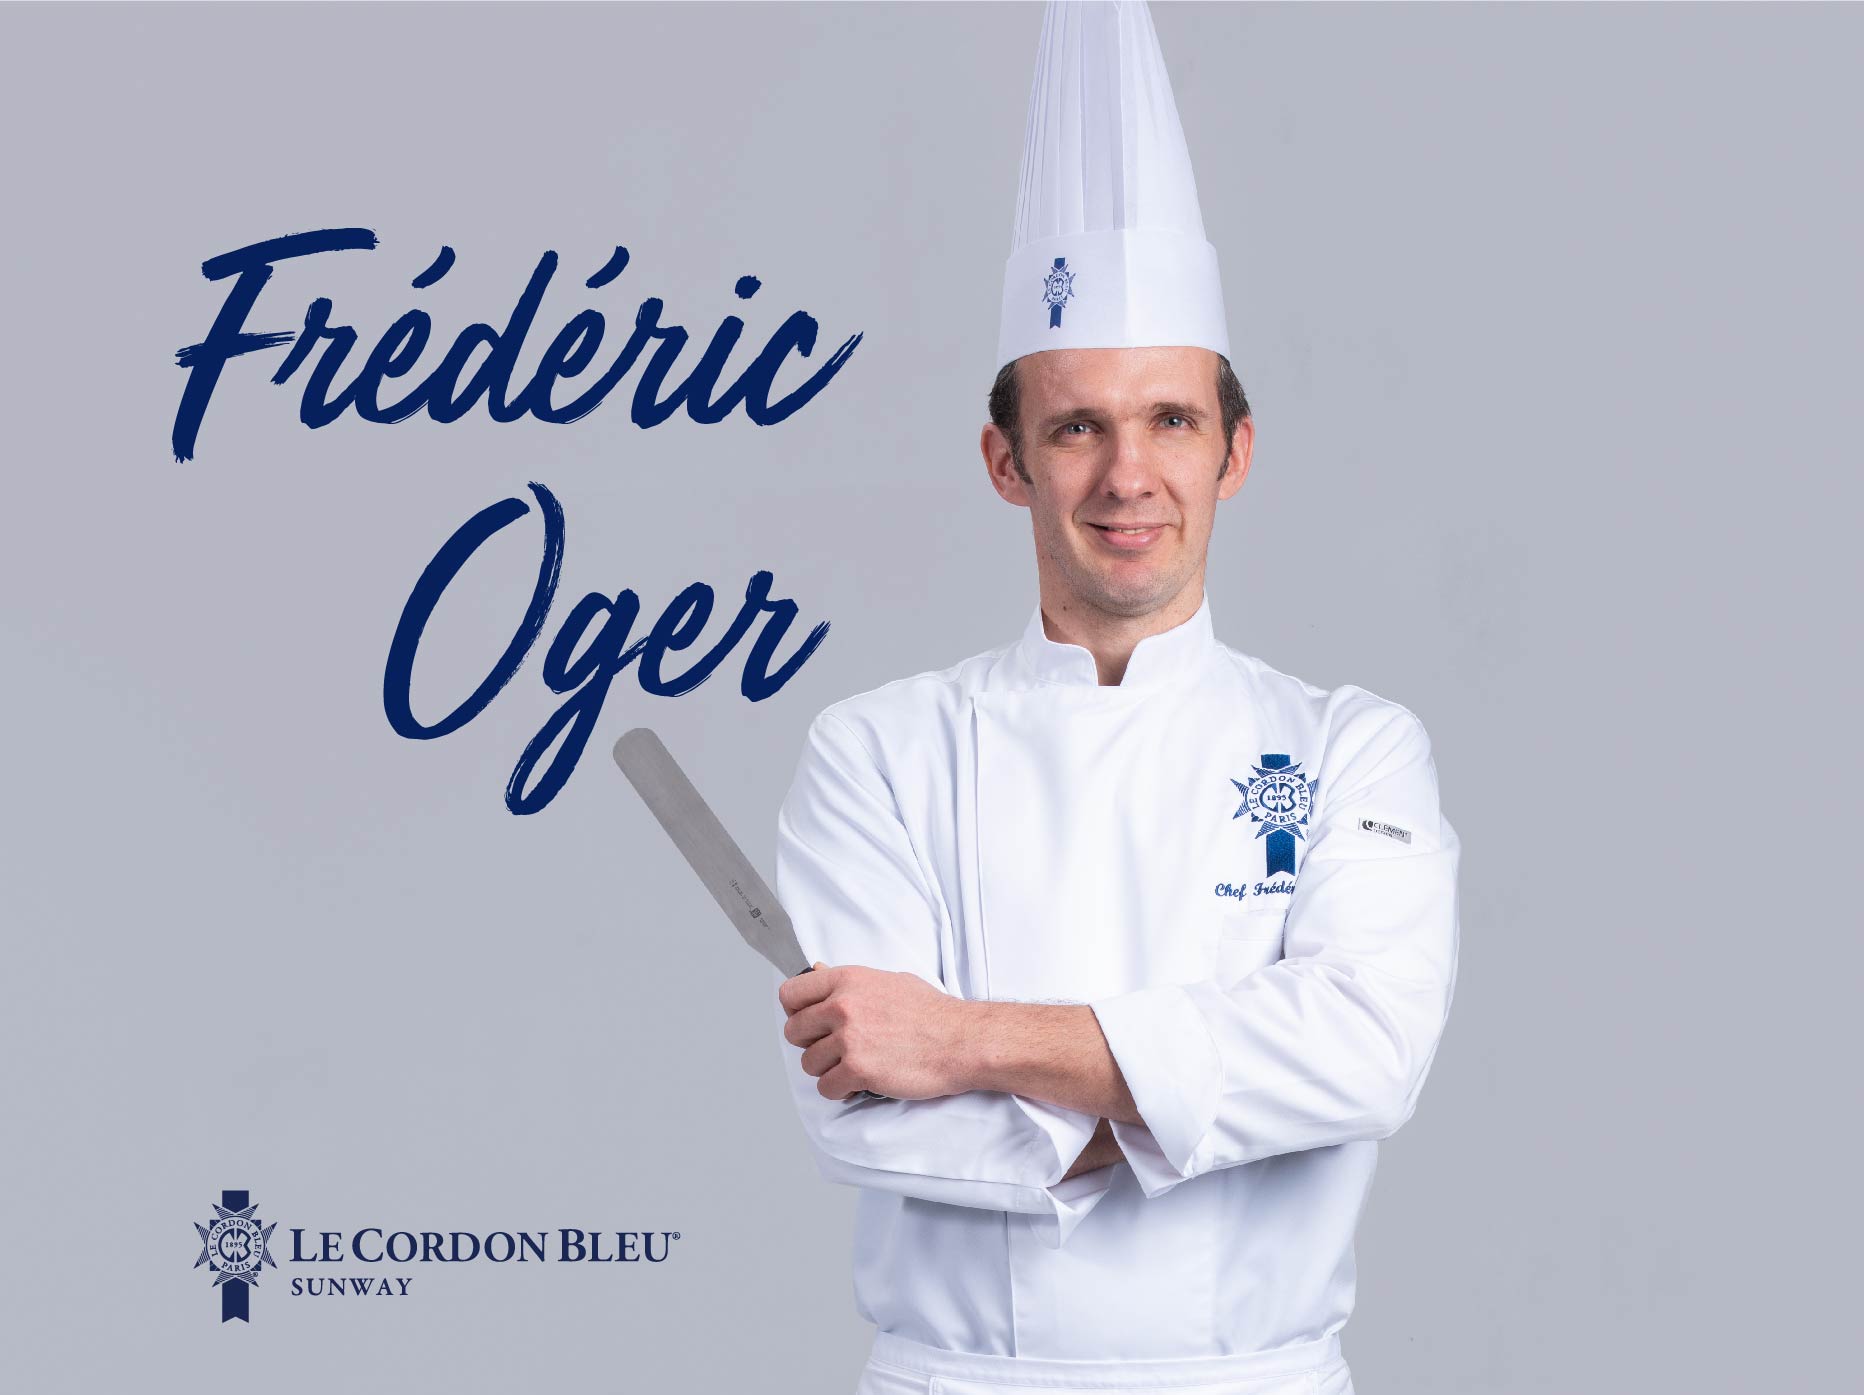 Chef Frédéric Oger, Pastry Chef Instructor of Sunway Le Cordon Bleu